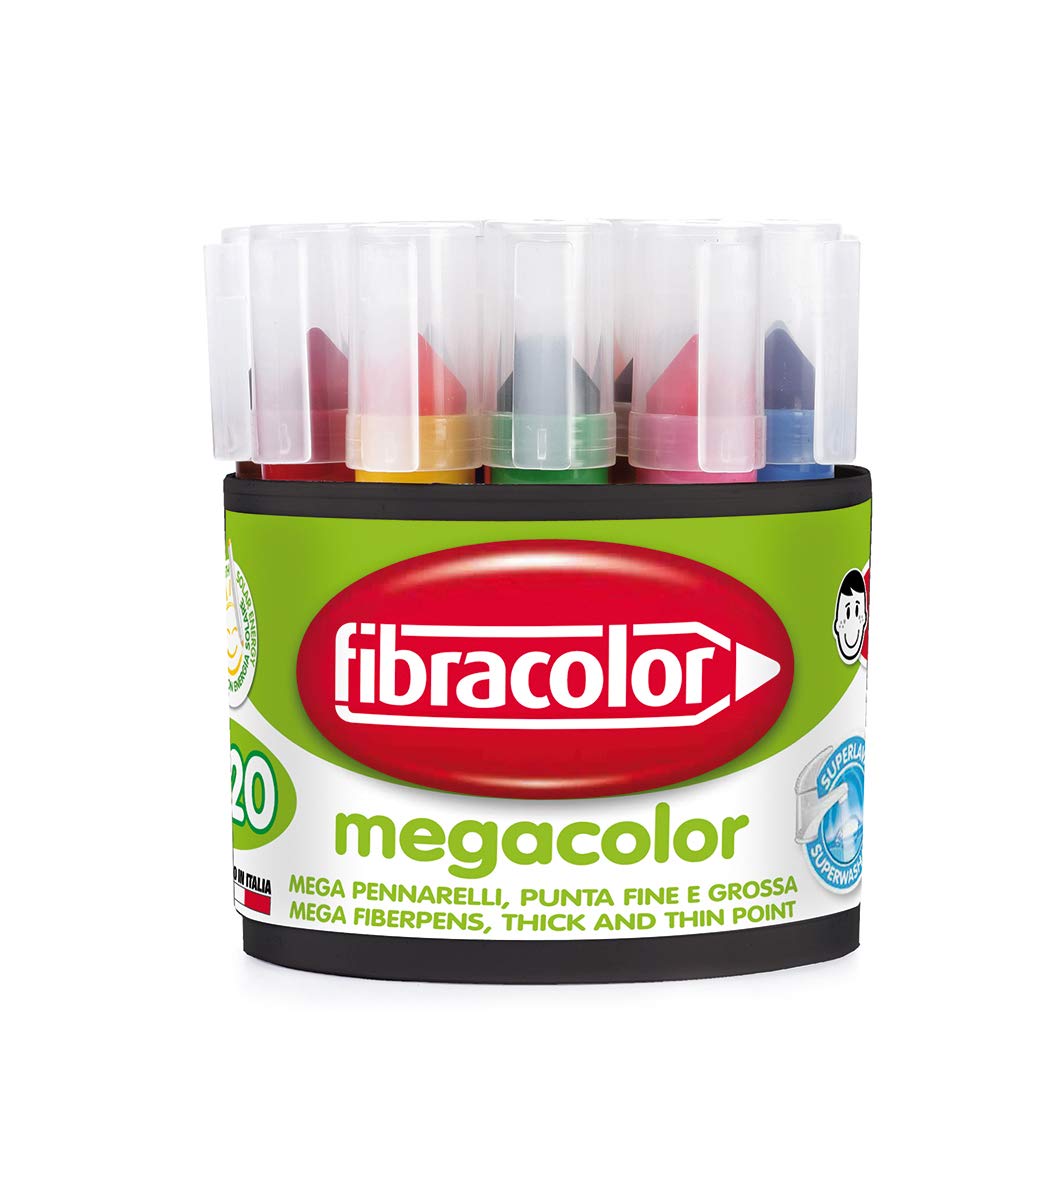 FIBRACOLOR Megacolor Marker 20 Stück, je 2 Stück je 10 Farben, Maxi-konische Spitze, Mega-Tintenfüller, super waschbar